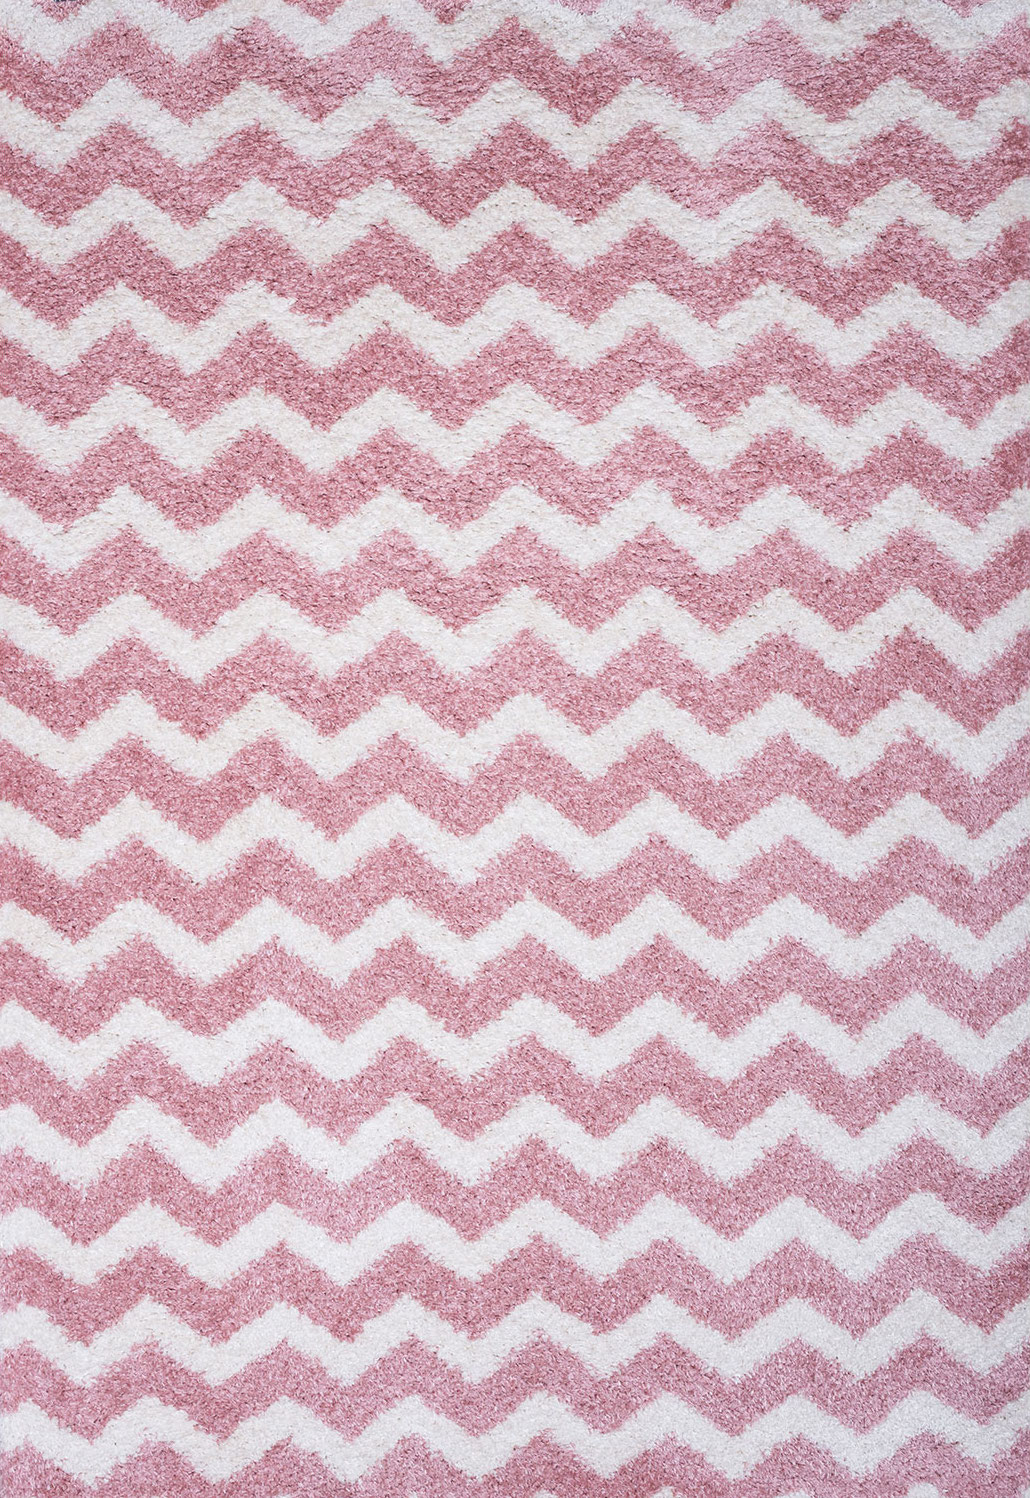 Shaggy παιδικό χαλί Cocoon 8396/55 ροζ με ζικ ζακ ρίγες - ΣΕΤ (0,70x1,50)x2 0,70x2,20 Colore Colori